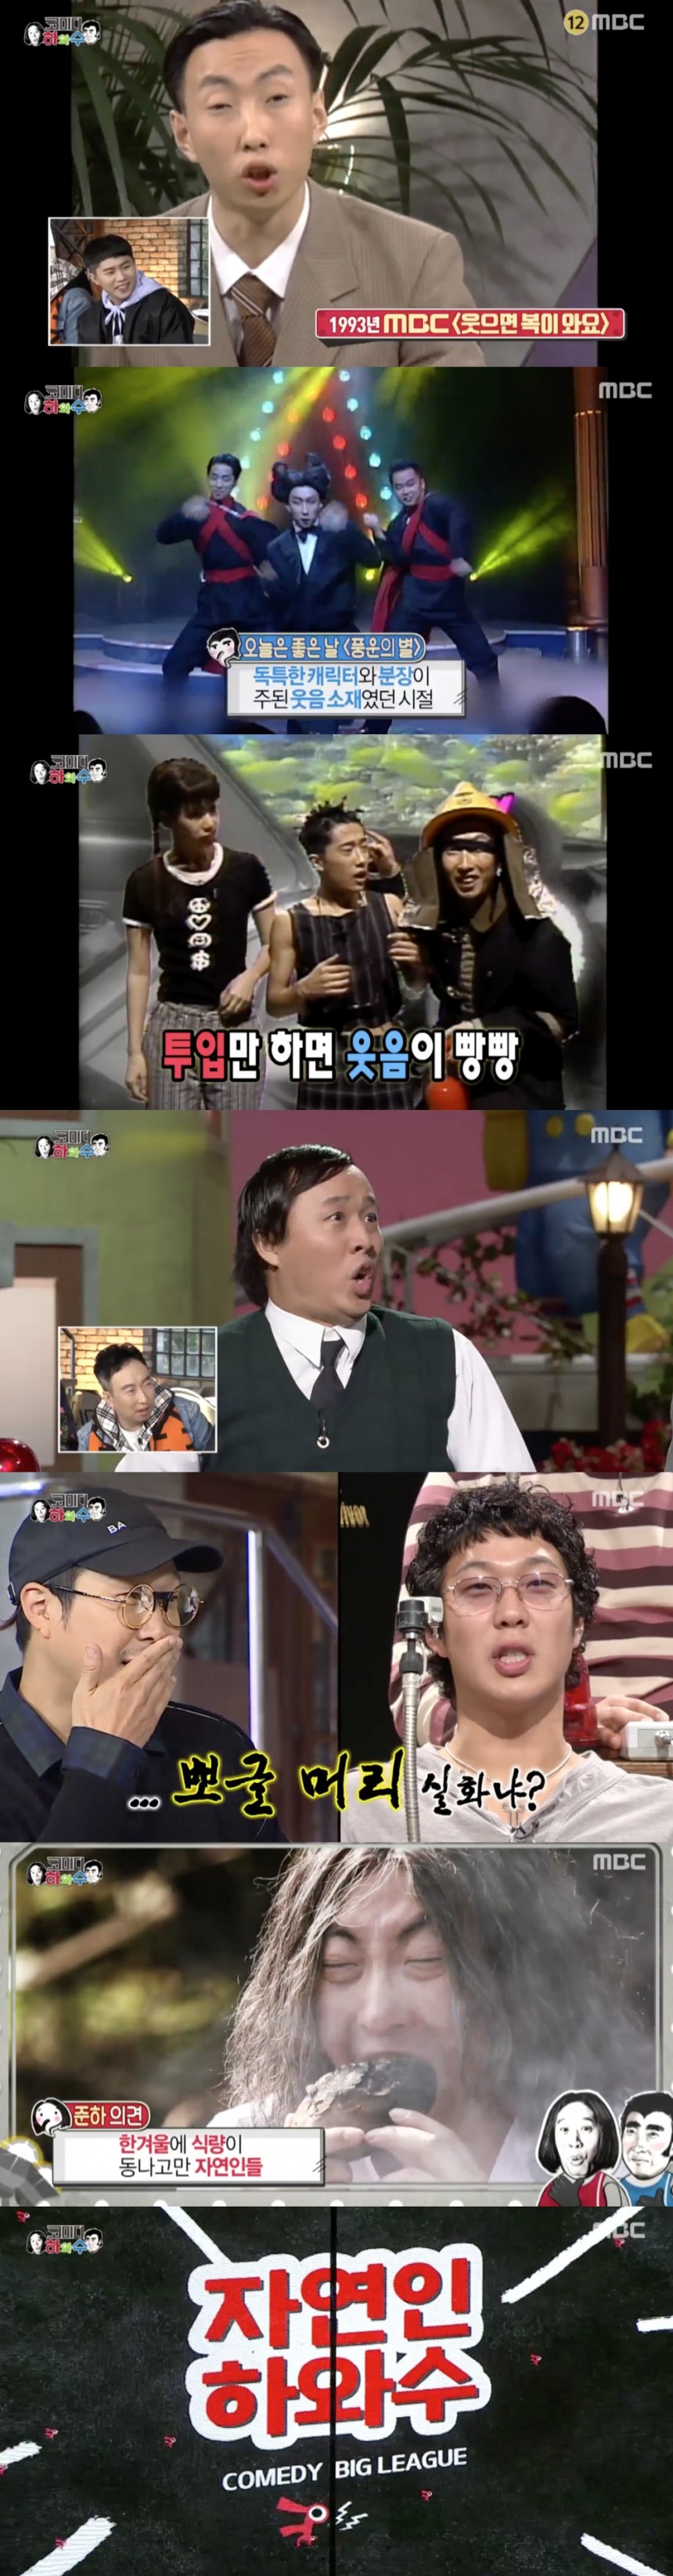 MBC ‘무한도전’ 방송 캡쳐 